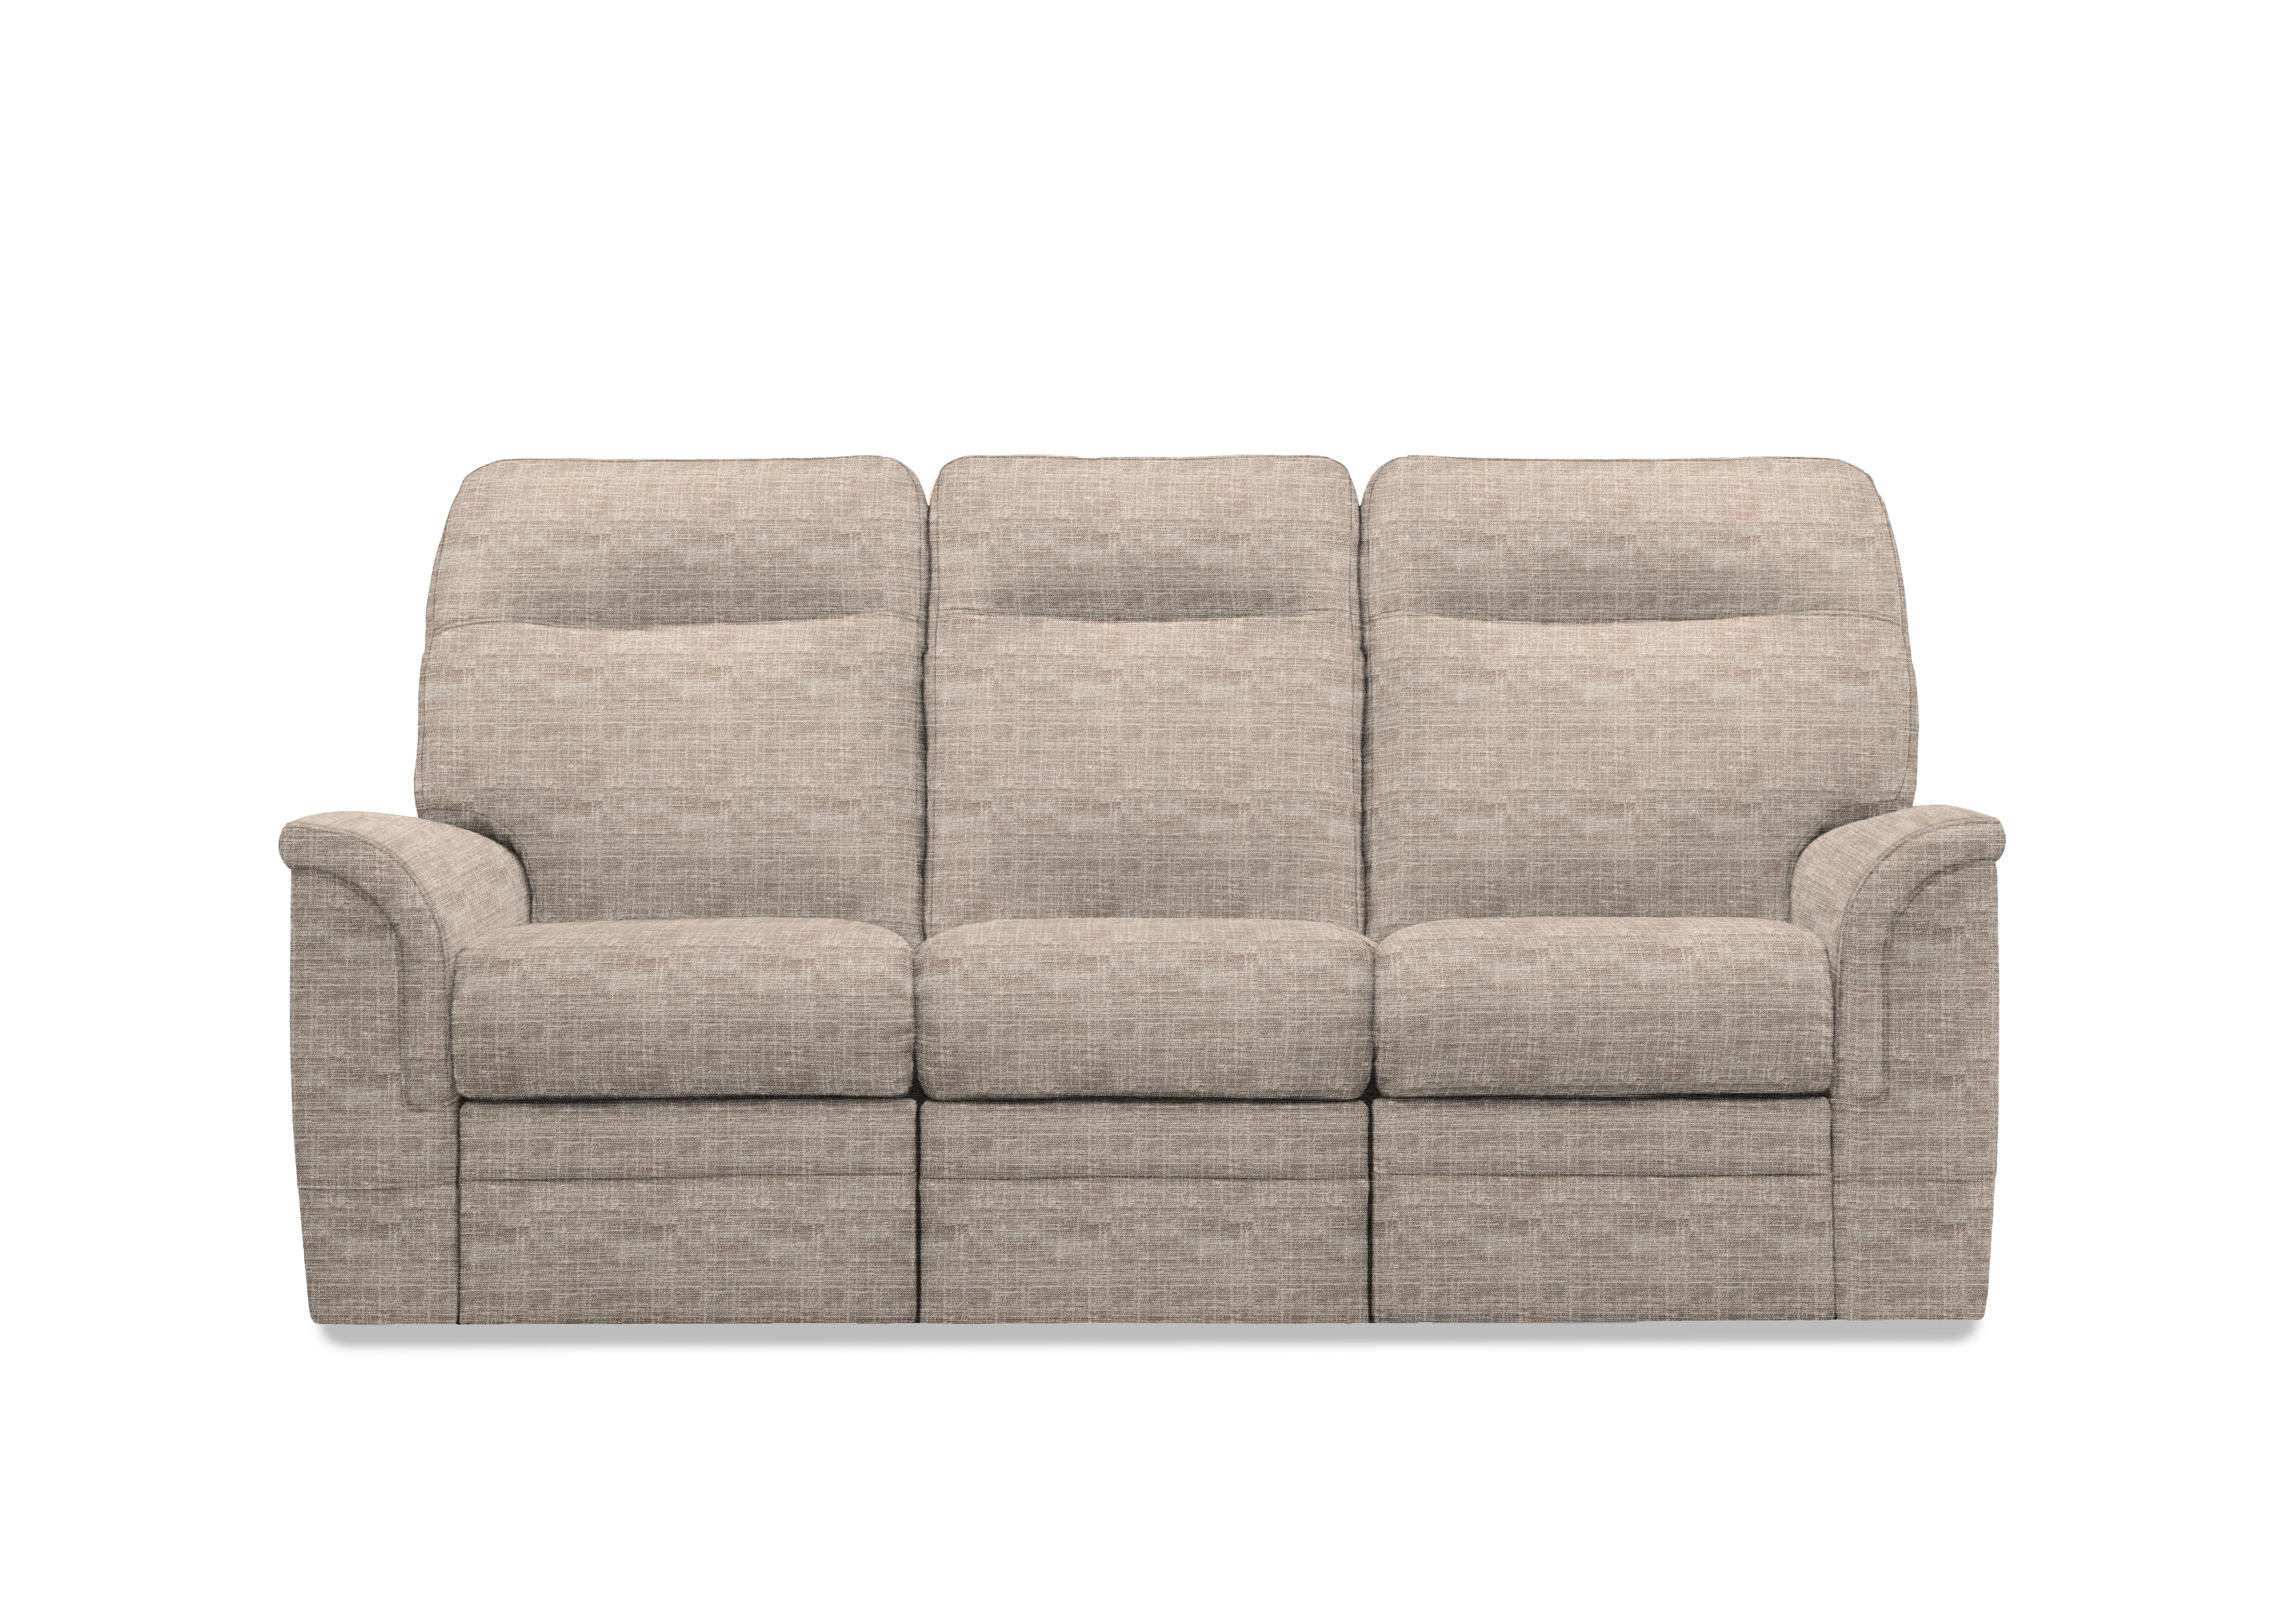 Hudson 23 Fabric 3 Seater Sofa in Dash Oatmeal 001497-0051 on Furniture Village